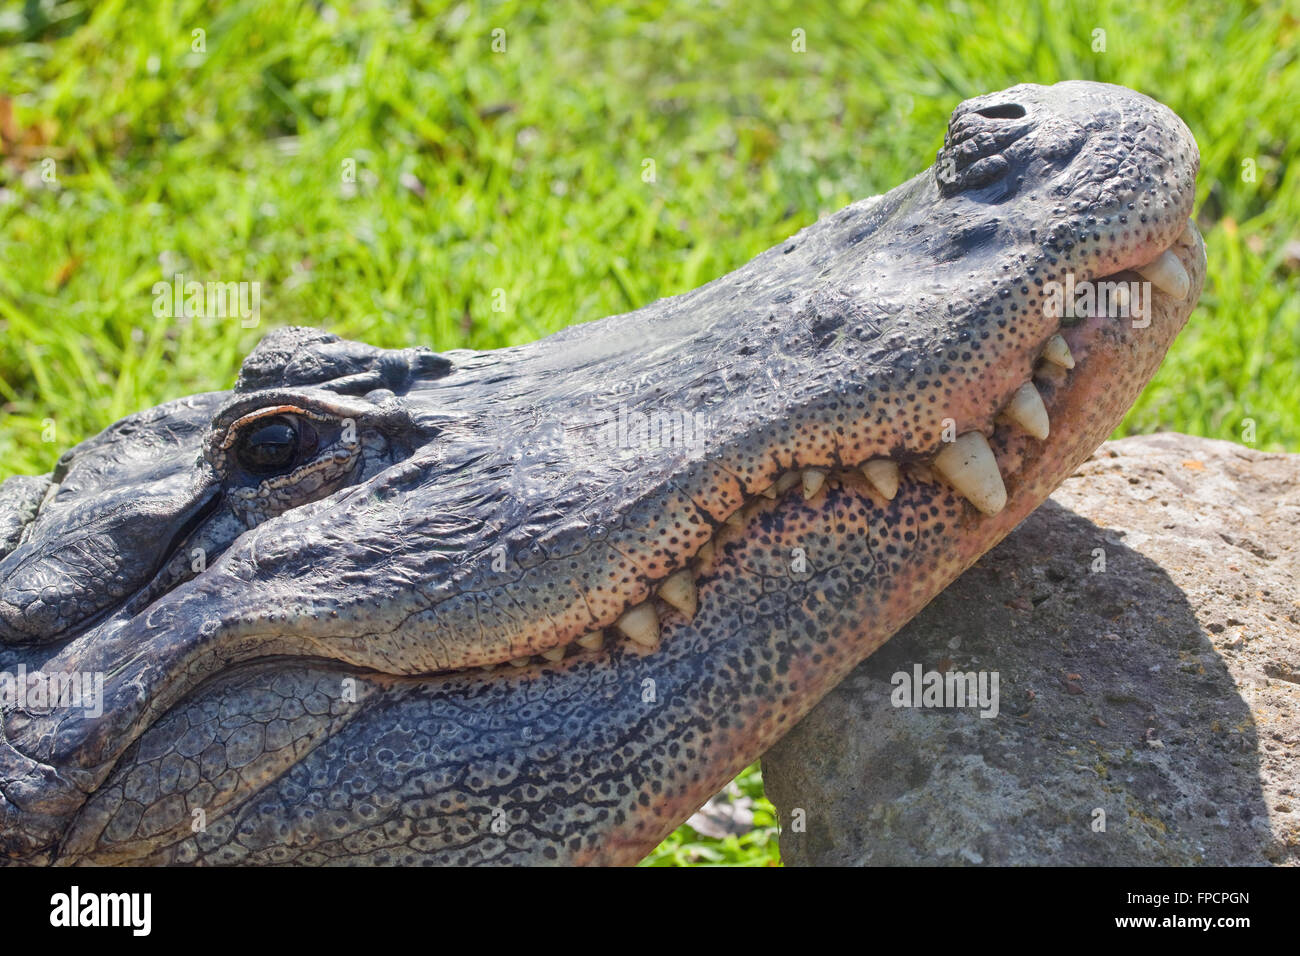 American Alligator (Alligator mississippiensis). Head, jaws, teeth. Head resting on a large stone, on land. Stock Photo